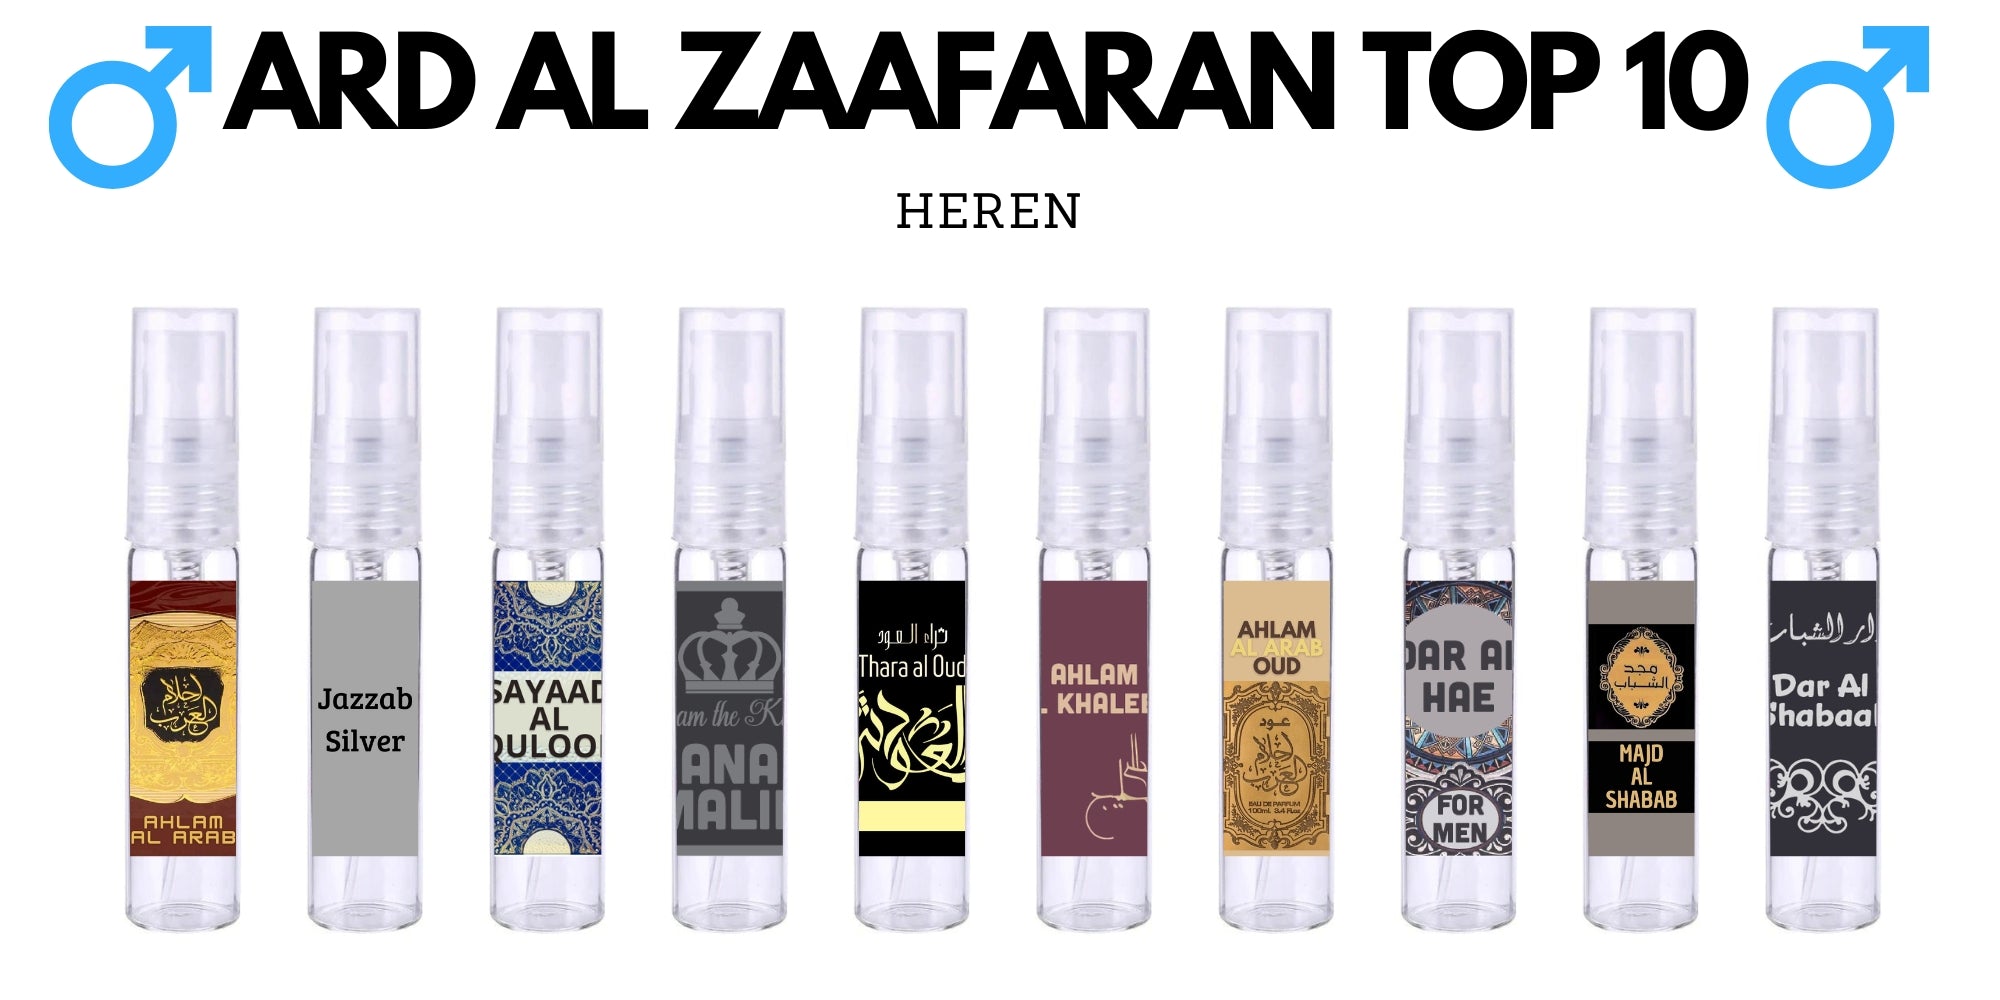 Ard al Zaafaran Top 10 Heren Sample Set - Ard al Zaafaran